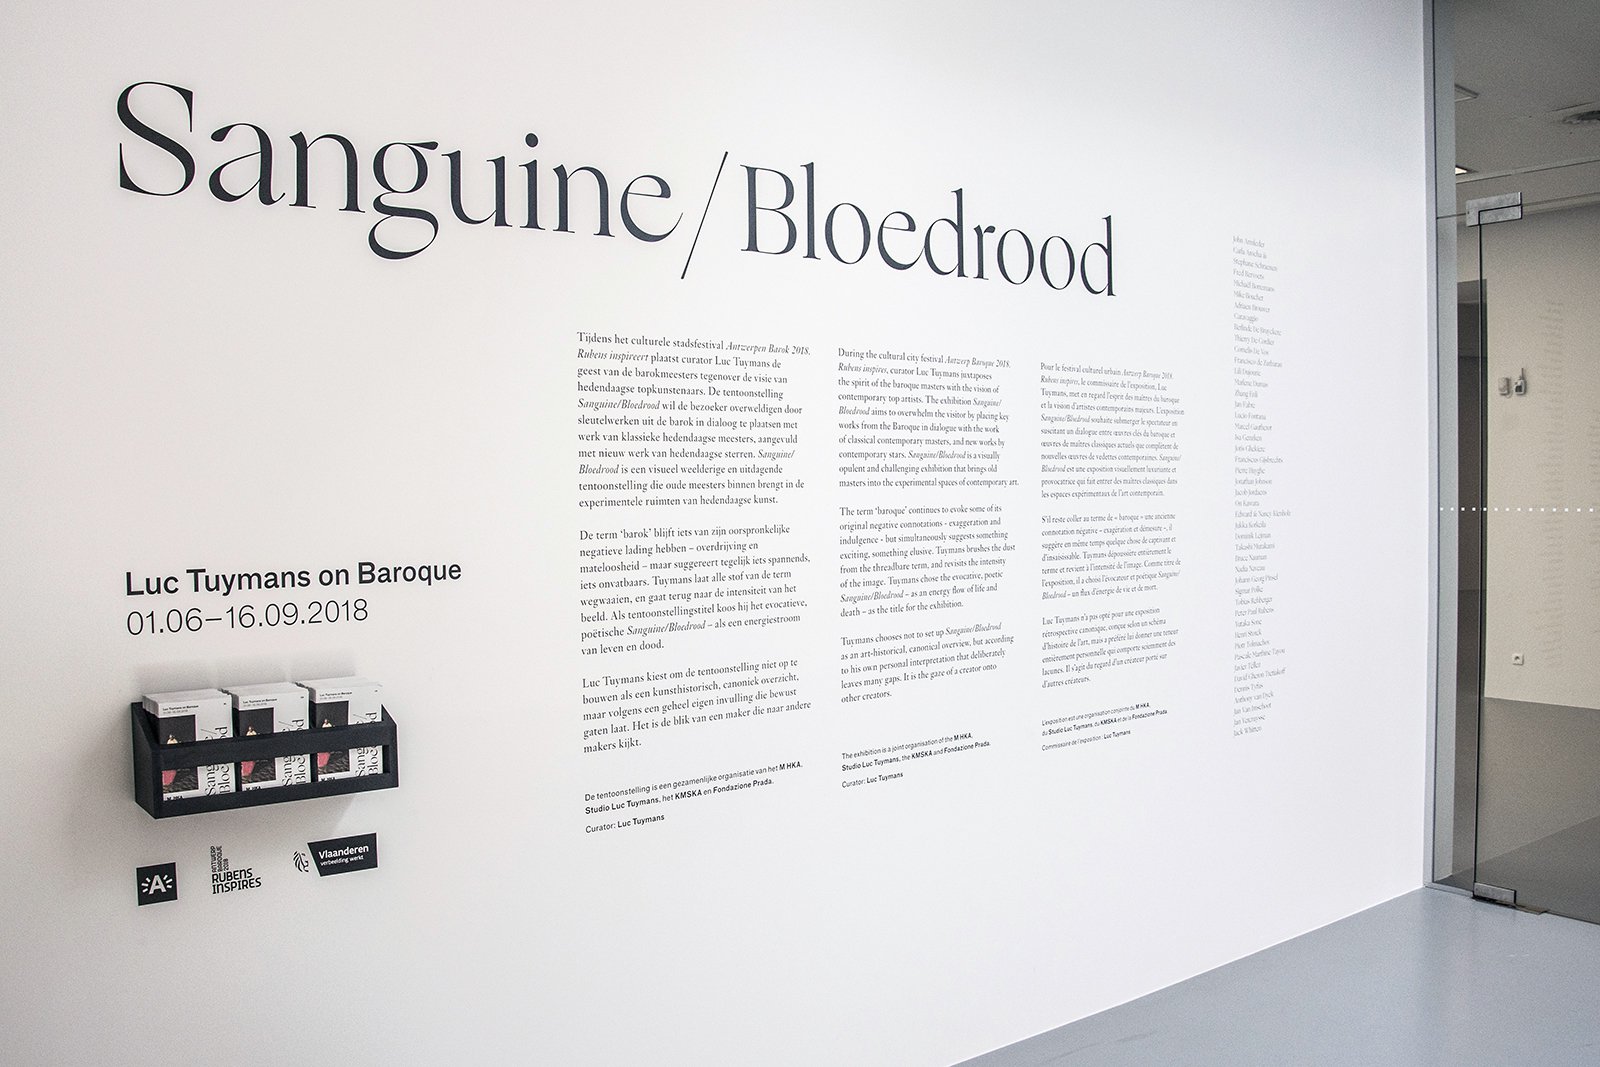 Sanguine-Bloedrood-1-exhibitiontest-Sharp-Type-Ogg